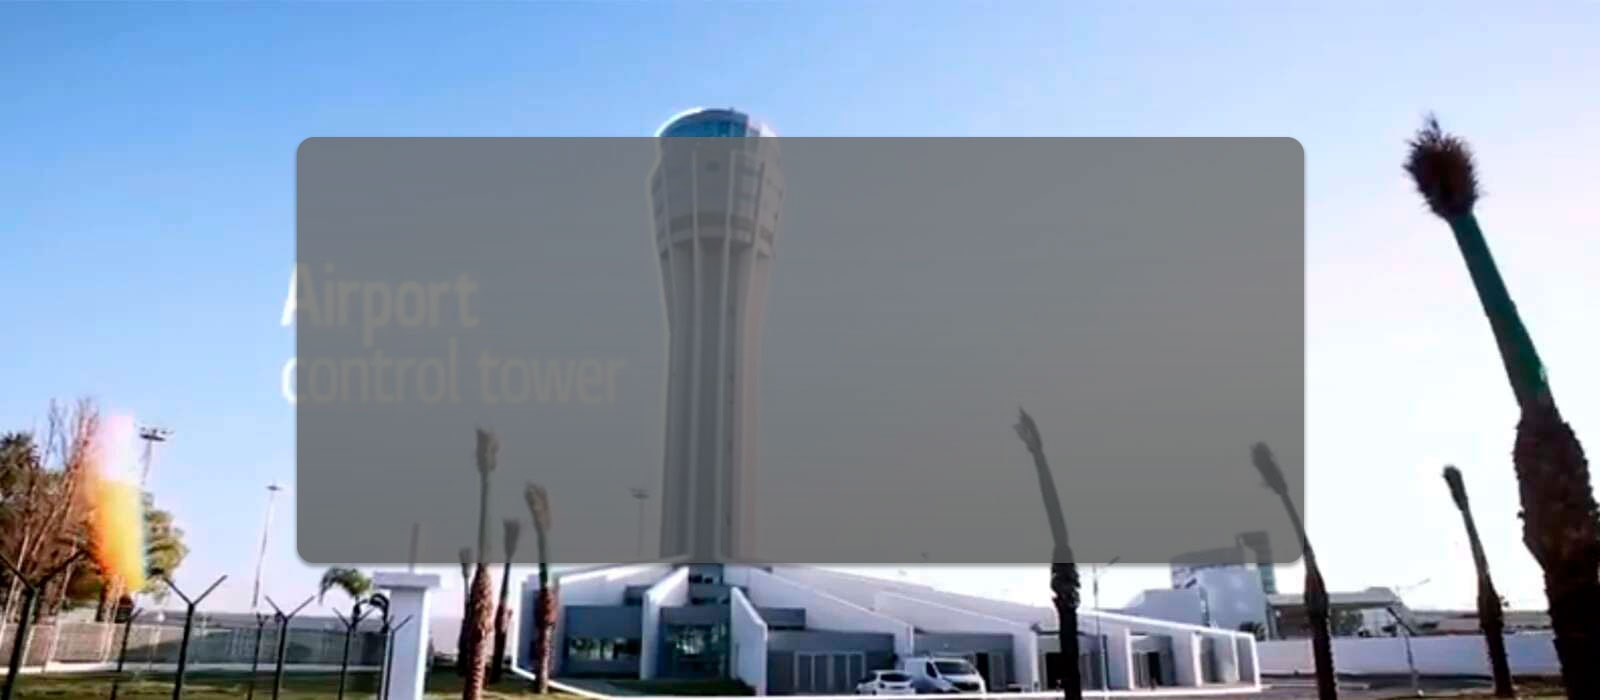 LG VRF Multi V Case Study_Algeria "Houari Boumediene Airport"1